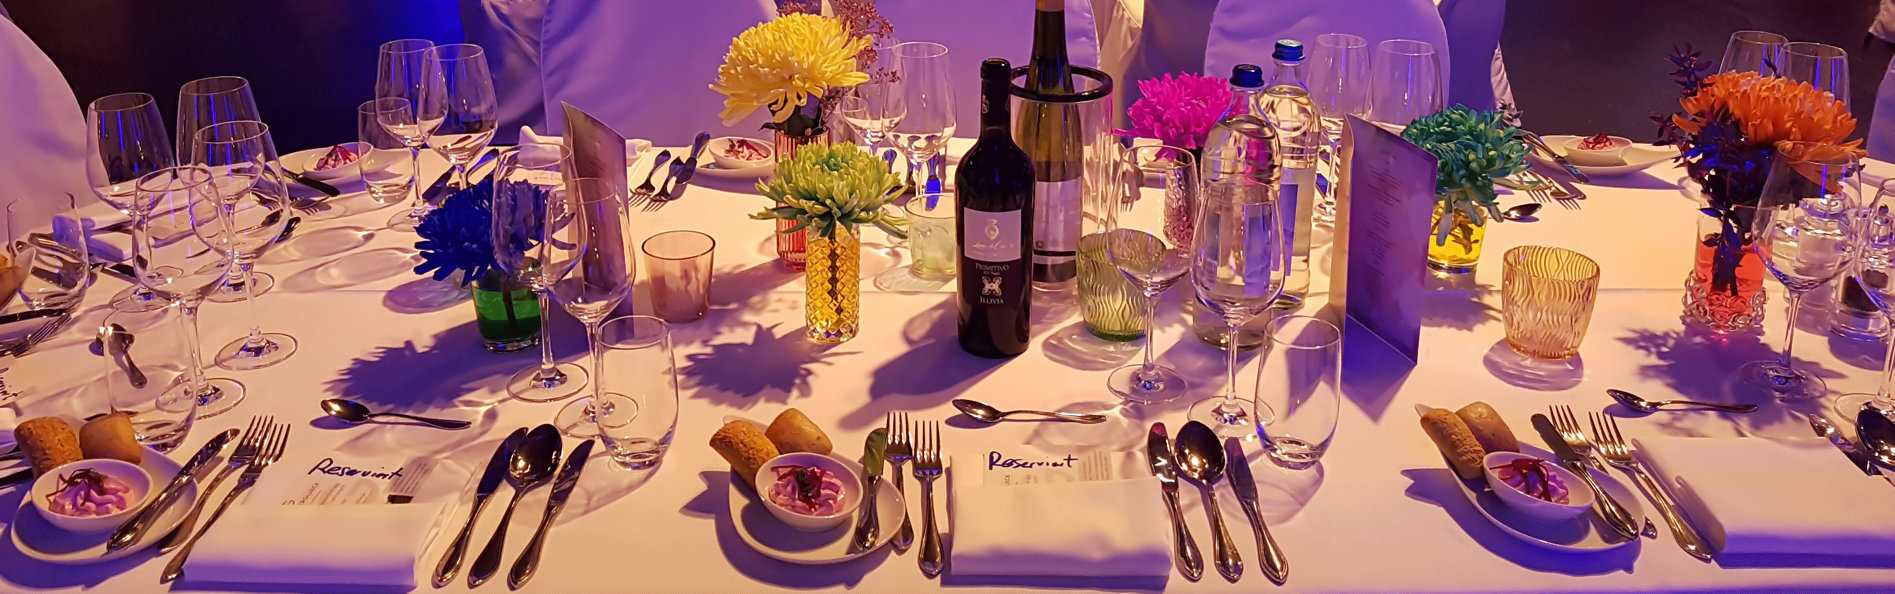 Prunkvoll gedeckter Tisch - Private-Dining - Unikorn Catering & Events